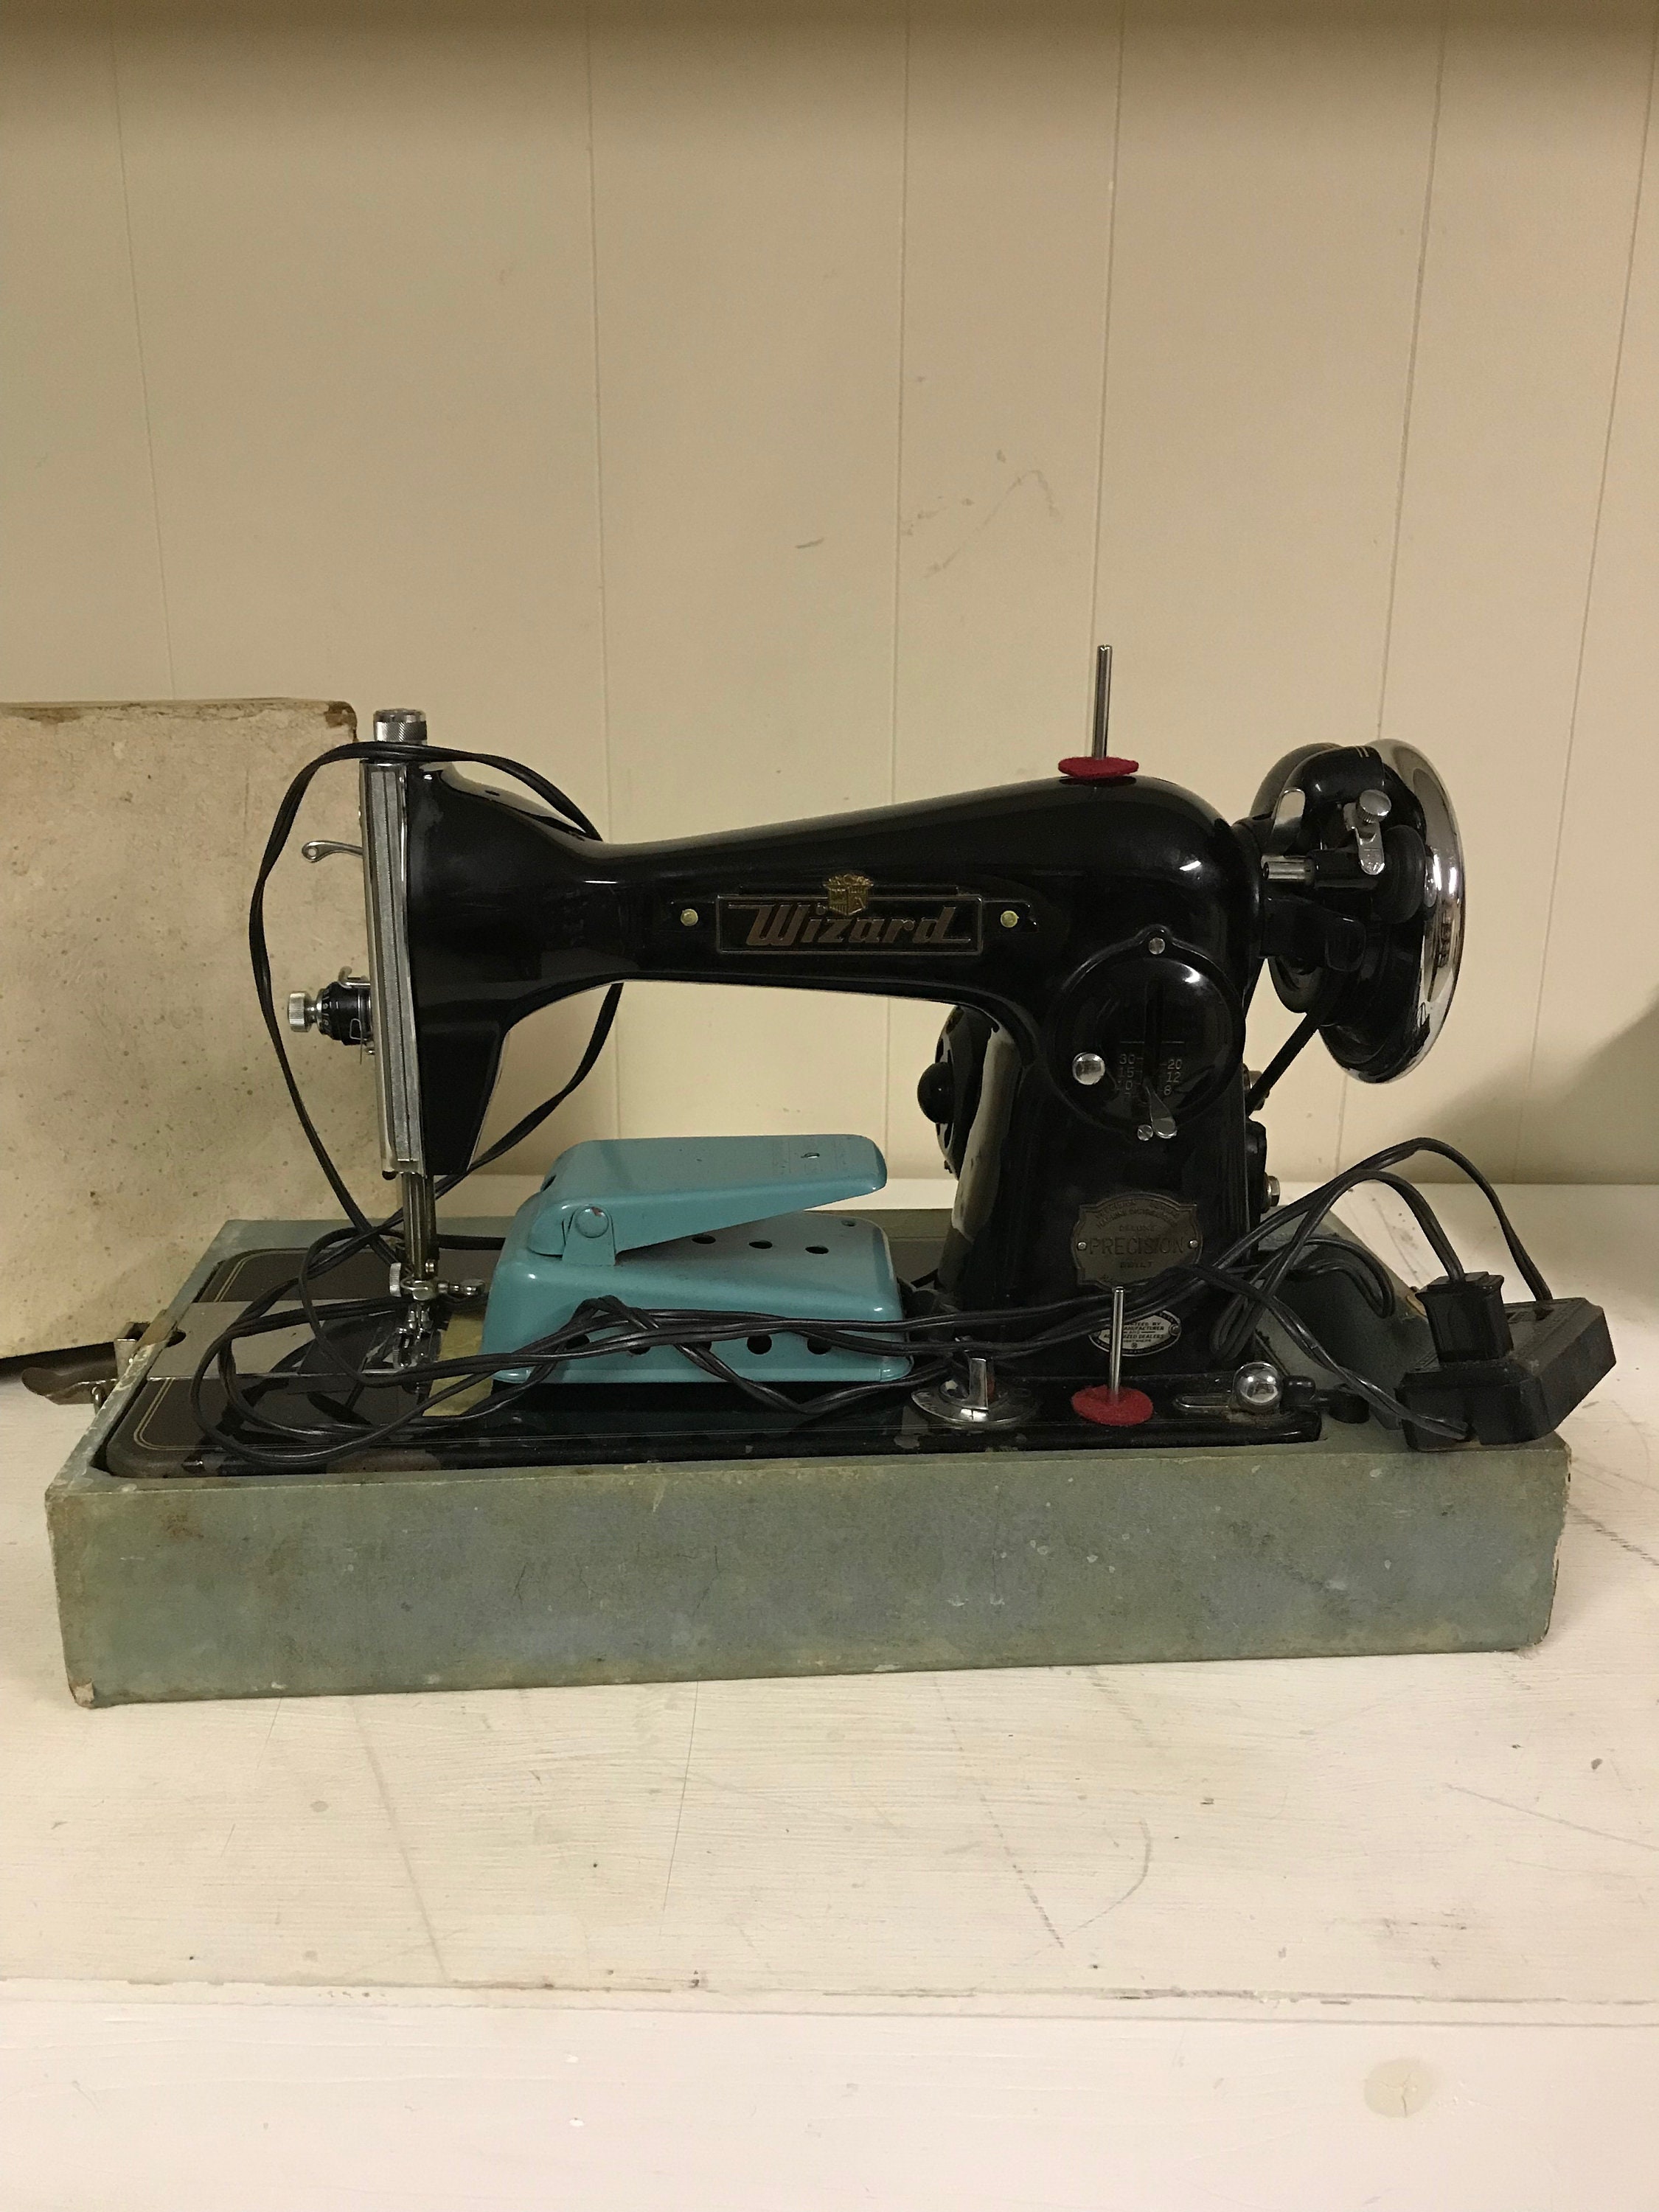 Crutello Sewing Machine Case - Universal Sewing Machine Carrying